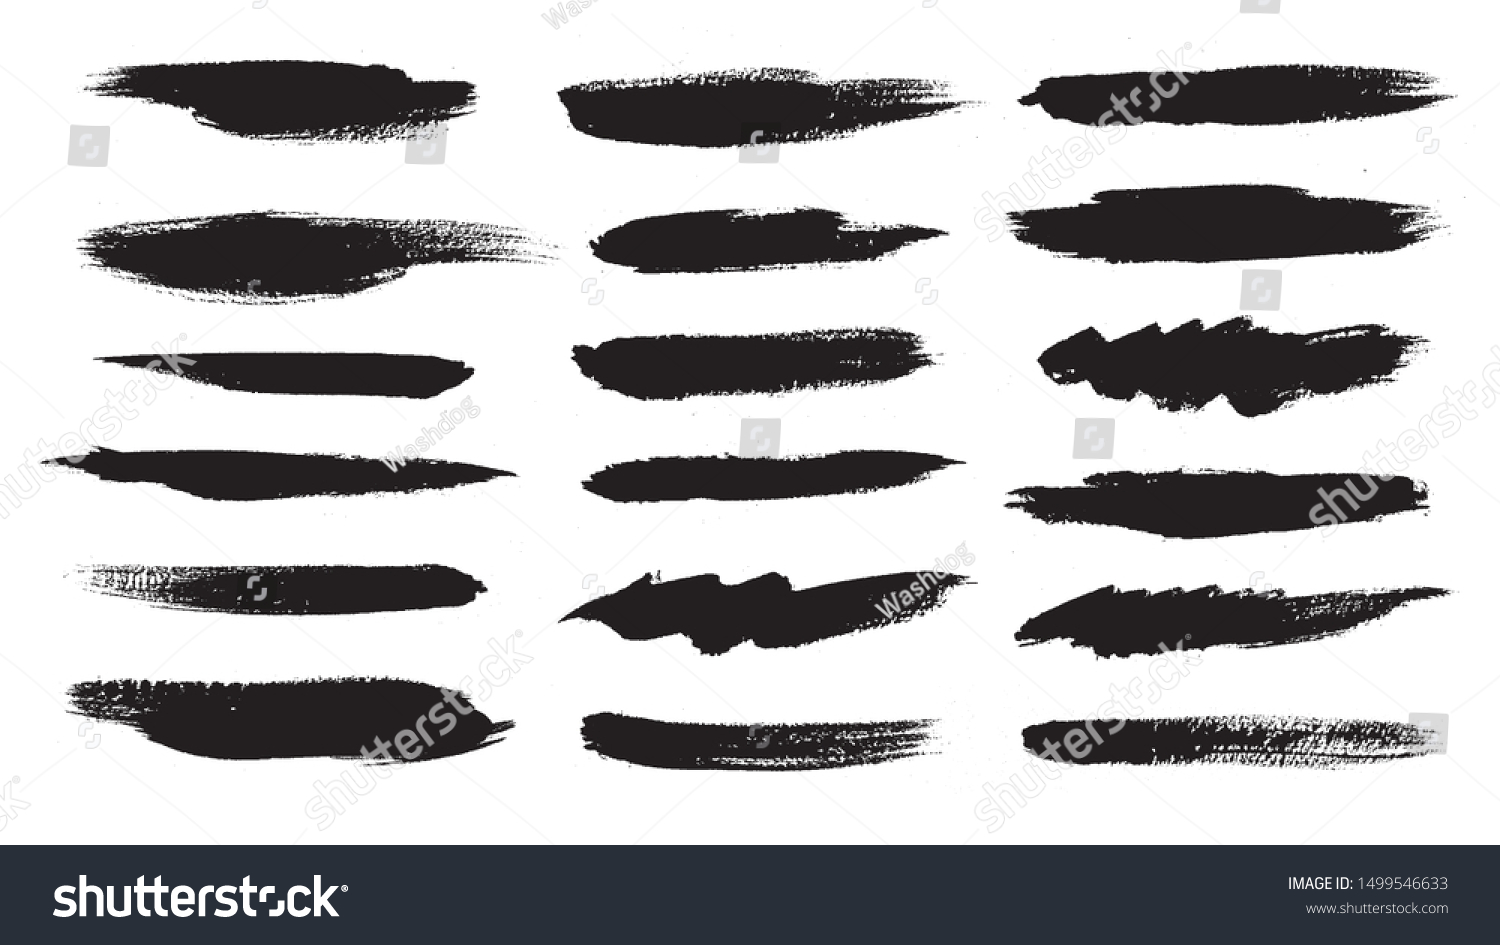 Black ink grunge brush strokes. Straight Brush Strokes. Vector illustration.  #1499546633